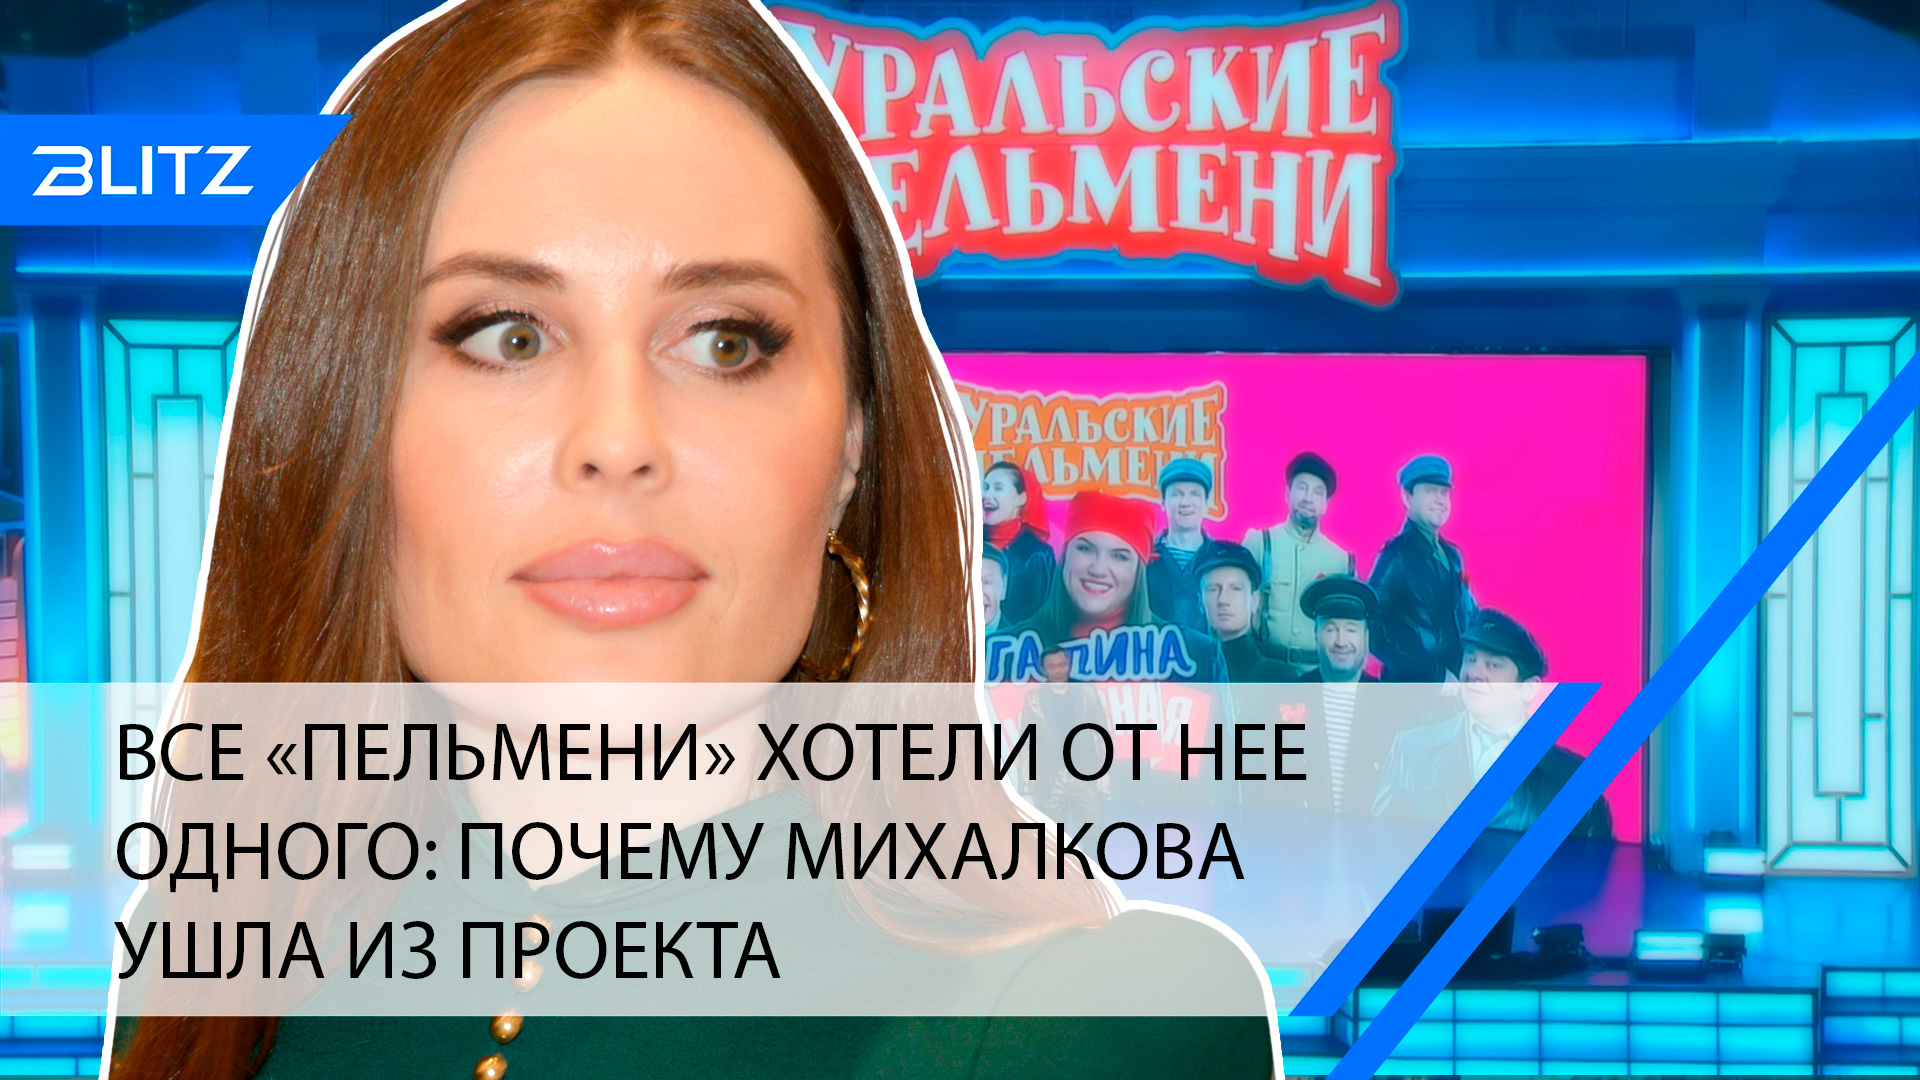 Юлия Михалкова 2019